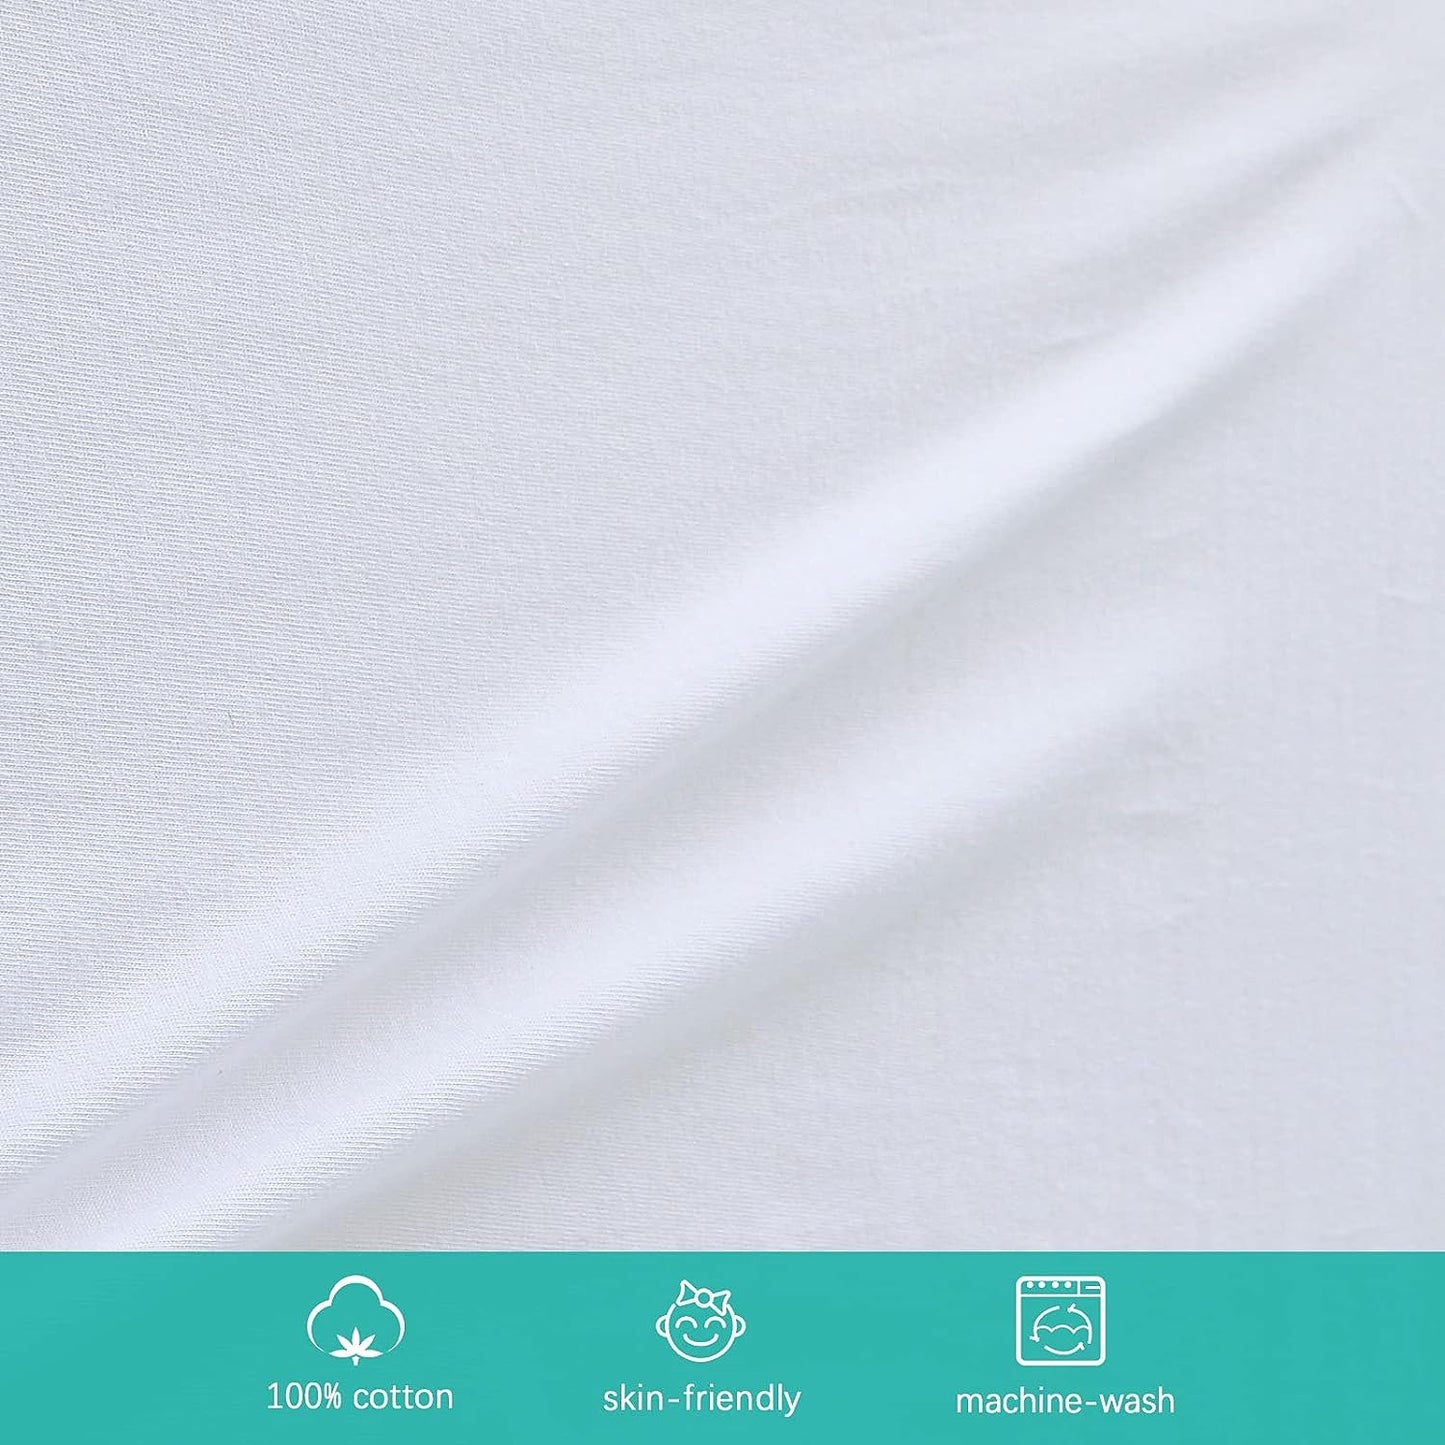 Bassinet Sheets - Fit RONBEI Baby Bassinet Bedside Sleeper, 2 Pack, 100% Organic Cotton